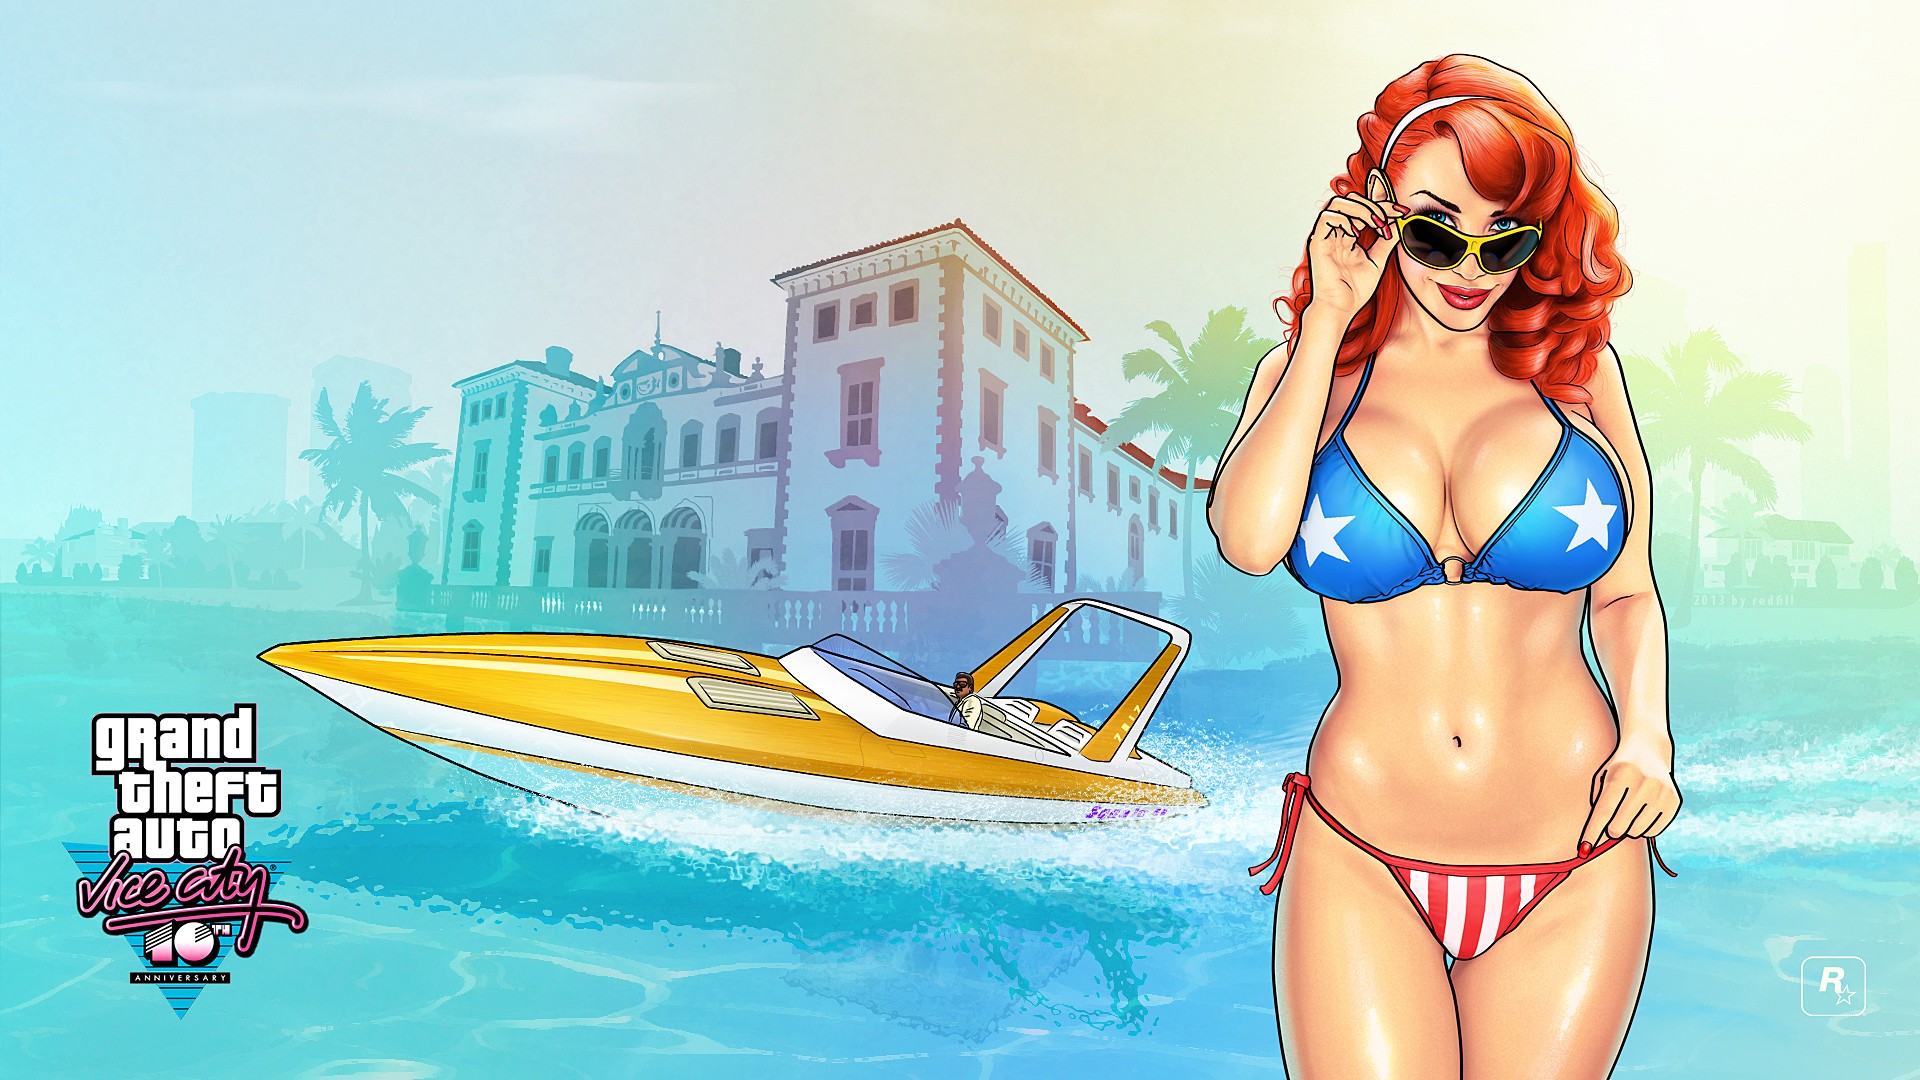 General 1920x1080 Grand Theft Auto boat USA bikini Grand Theft Auto: Vice City big boobs redhead women Rockstar Games boobs belly women with shades sunglasses curvy vehicle video game art standing digital art video games